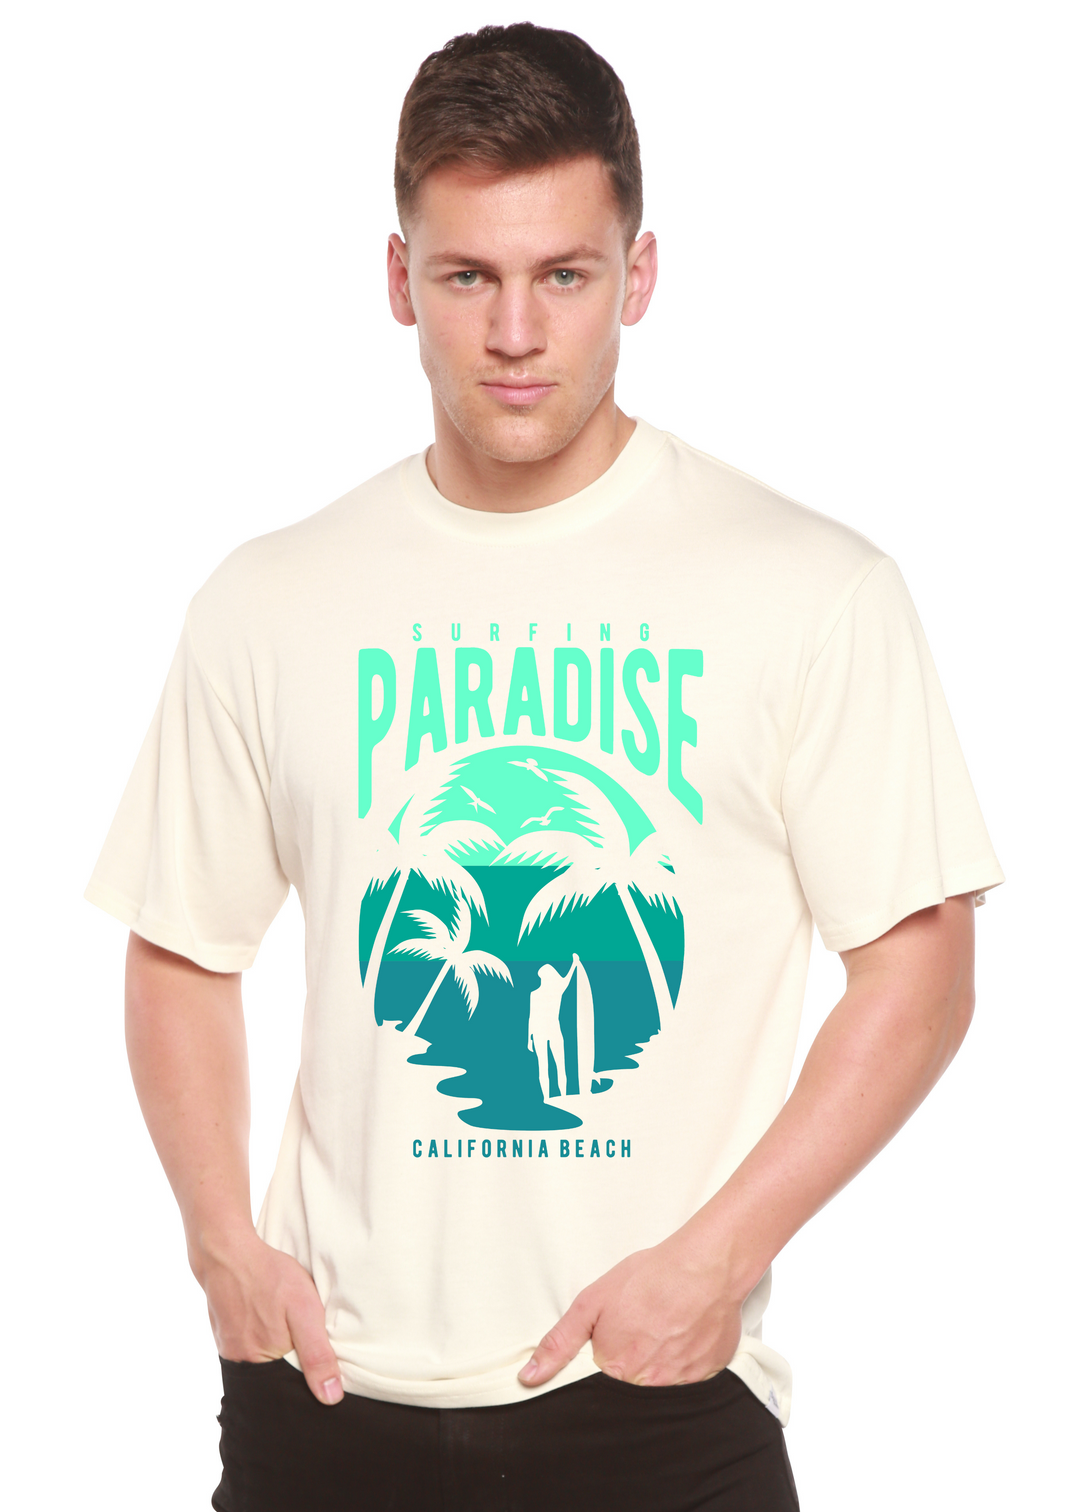 Surfing Paradise California men's bamboo tshirt white